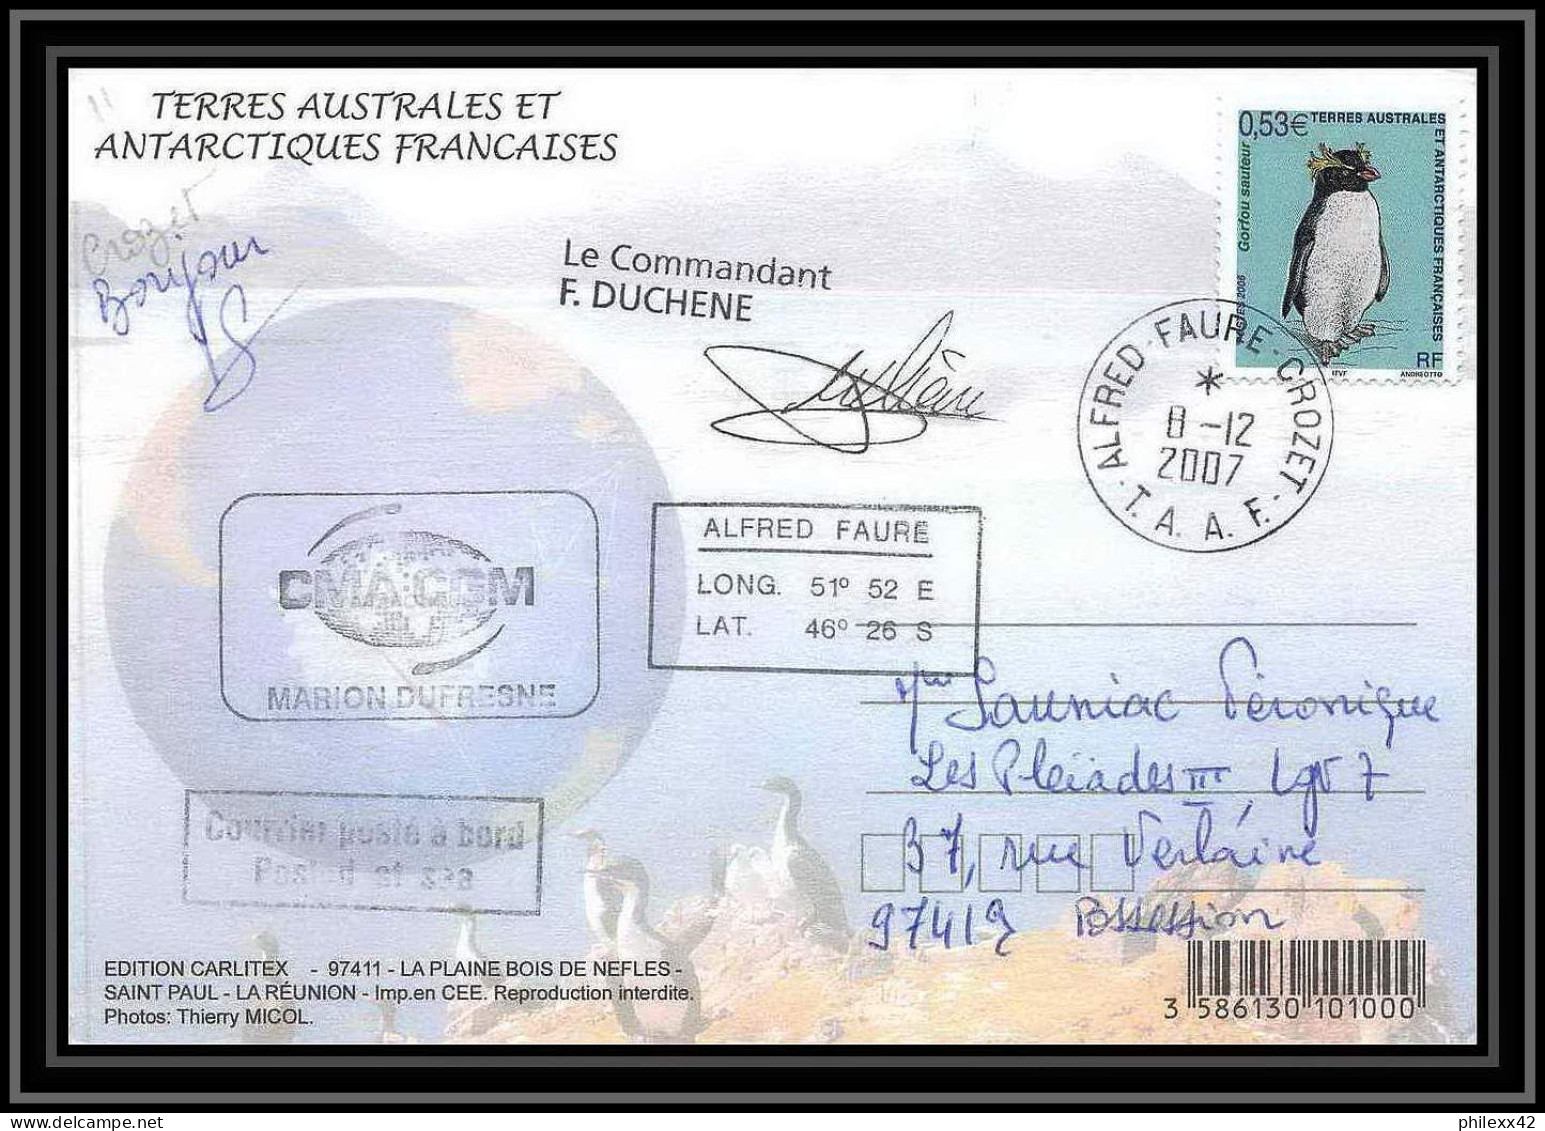 2751 ANTARCTIC Terres Australes (taaf)-carte Postale Dufresne 2 Signé Signed Op 2007/4 N°450 CROZET 11/12/2007 - Spedizioni Antartiche